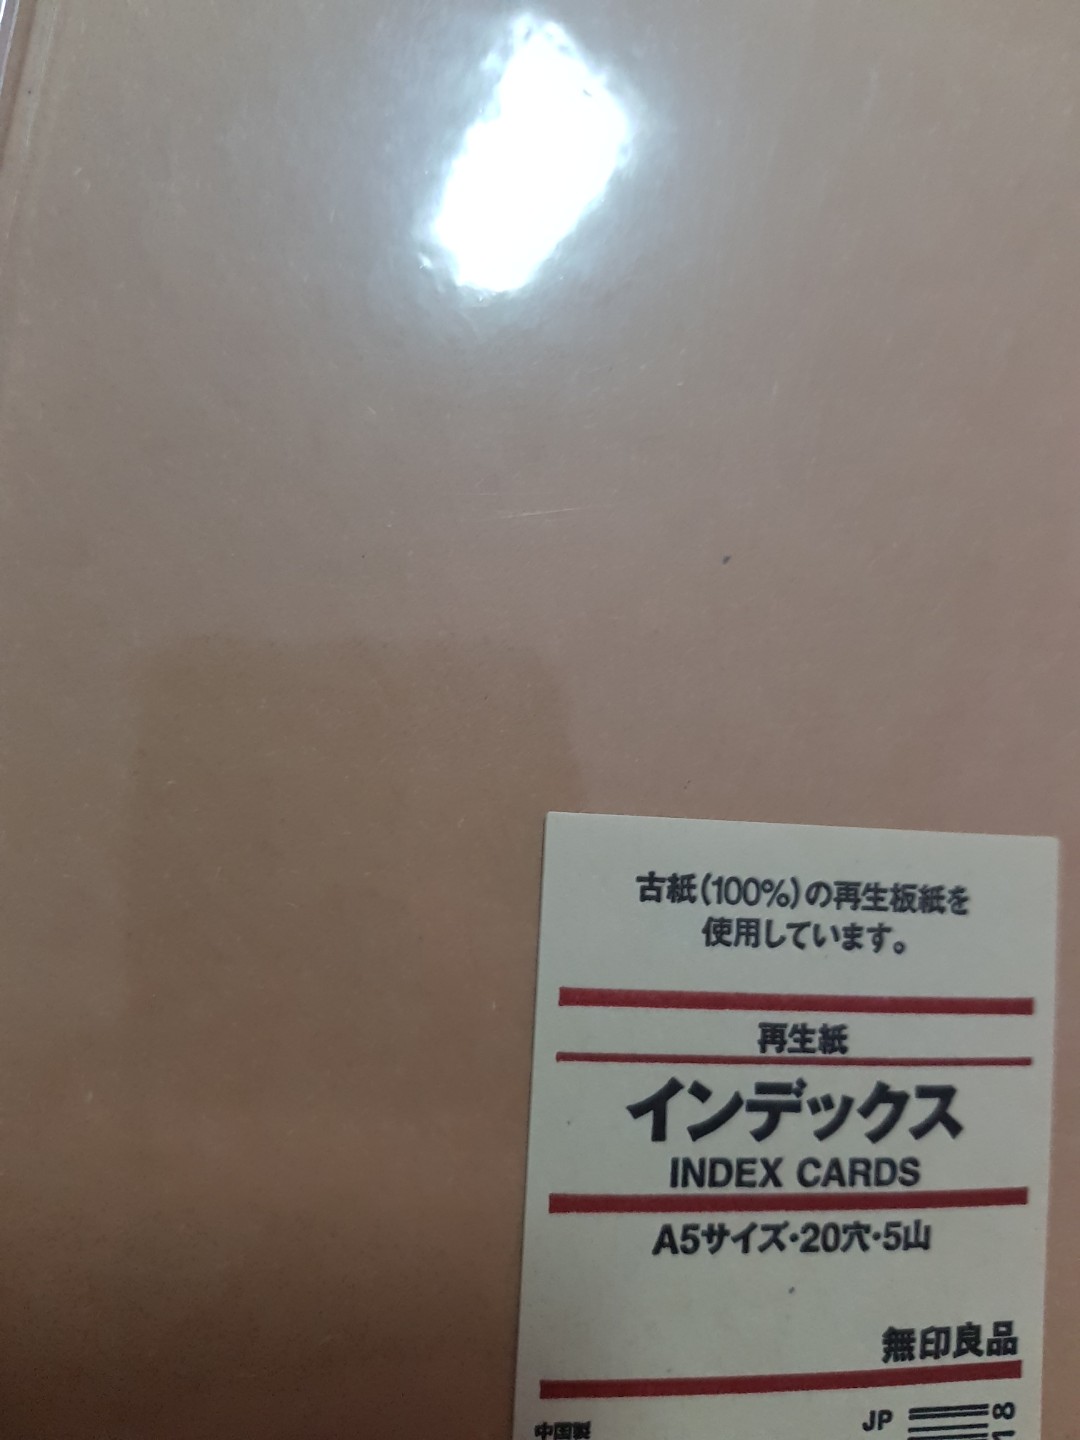 300 Index Cards Muji Index Cards